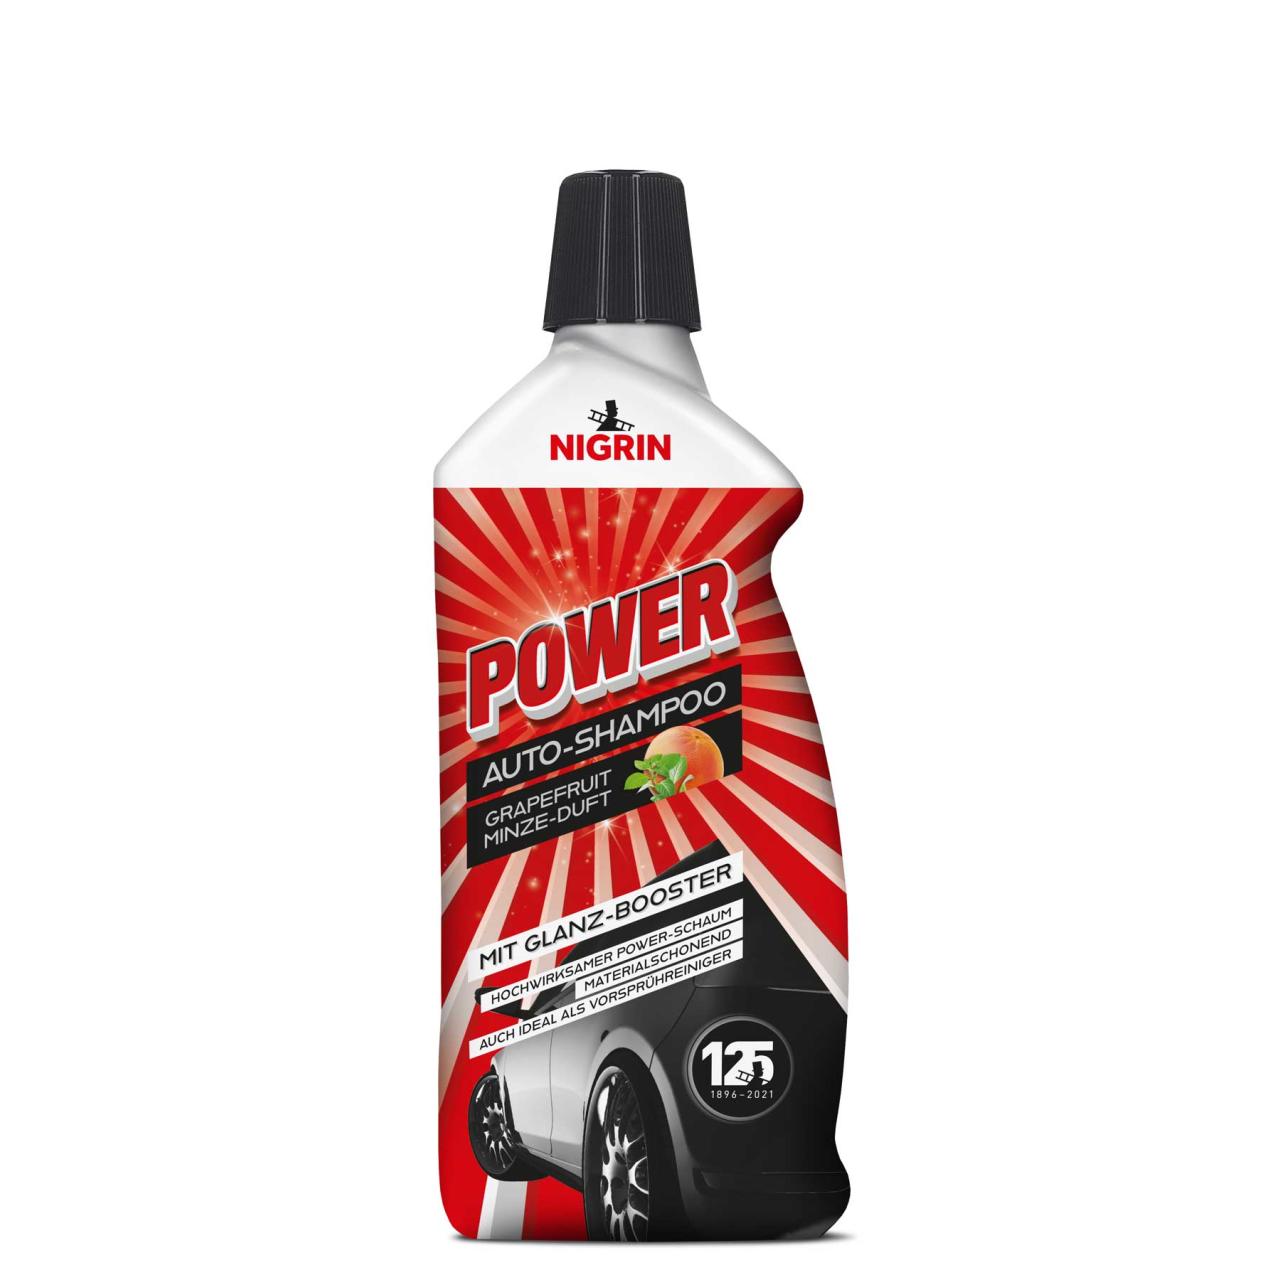 NIGRIN Auto-Shampoo POWER, Grapefruit/Minze 1 Liter